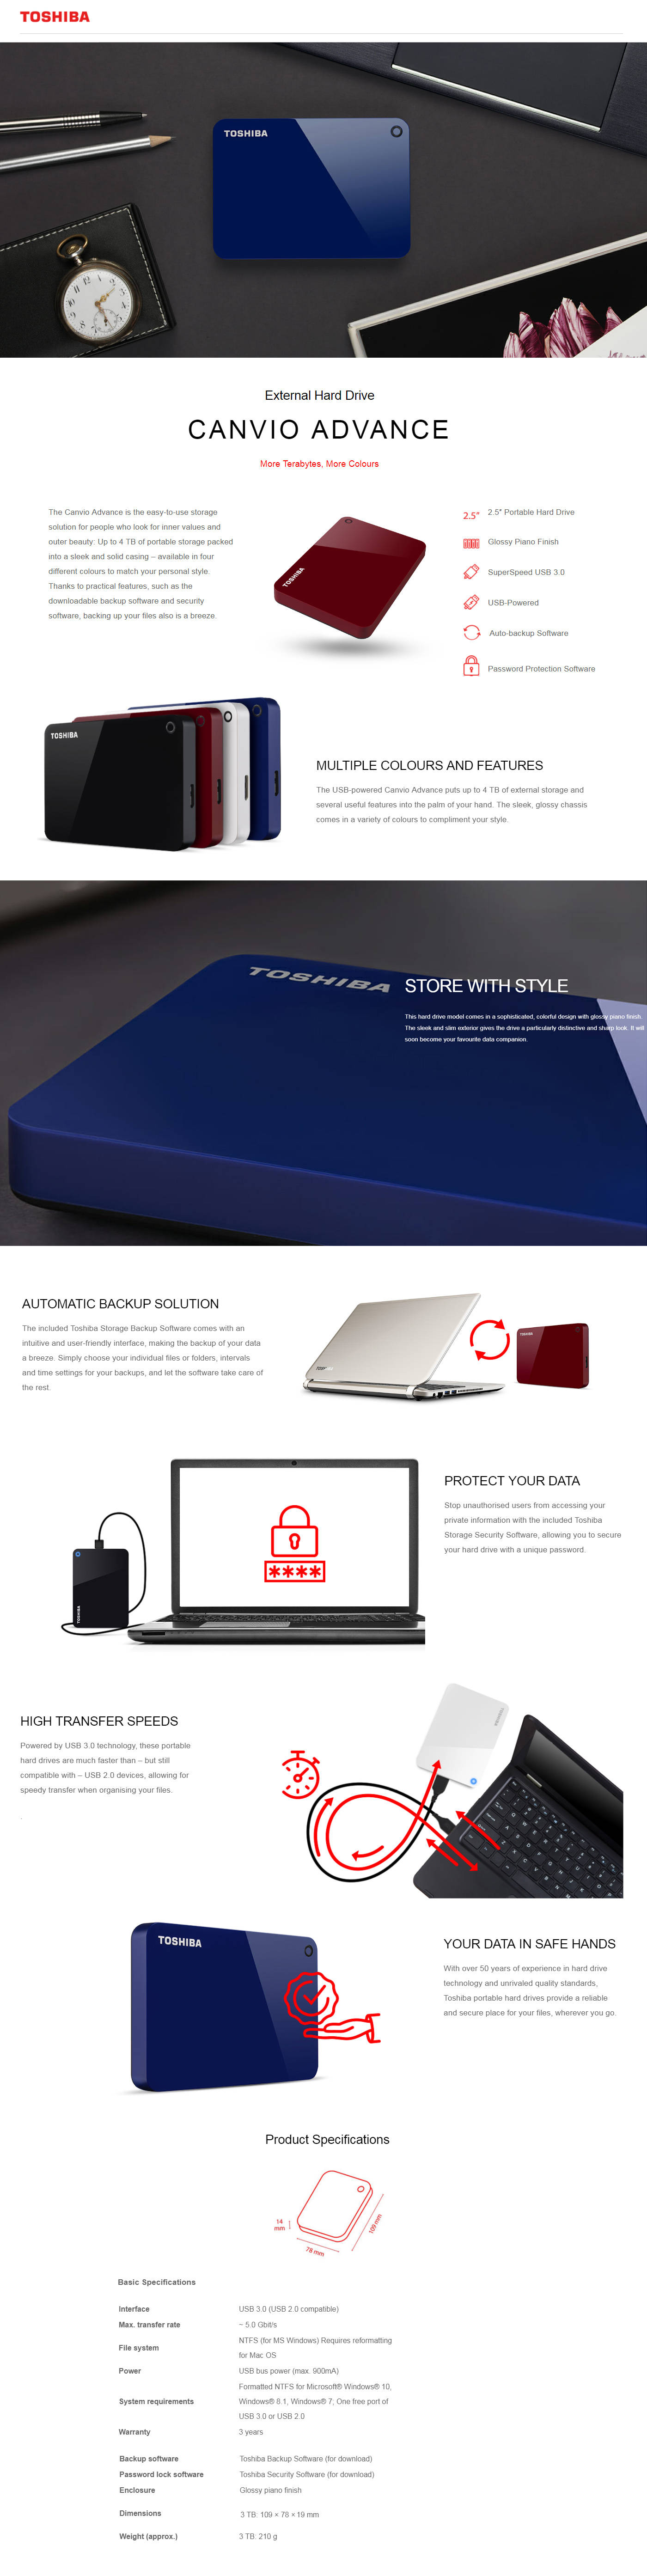 Buy Online Toshiba Canvio Advance 3TB Portable Hard Drive - White (HDTC930AW3CA)